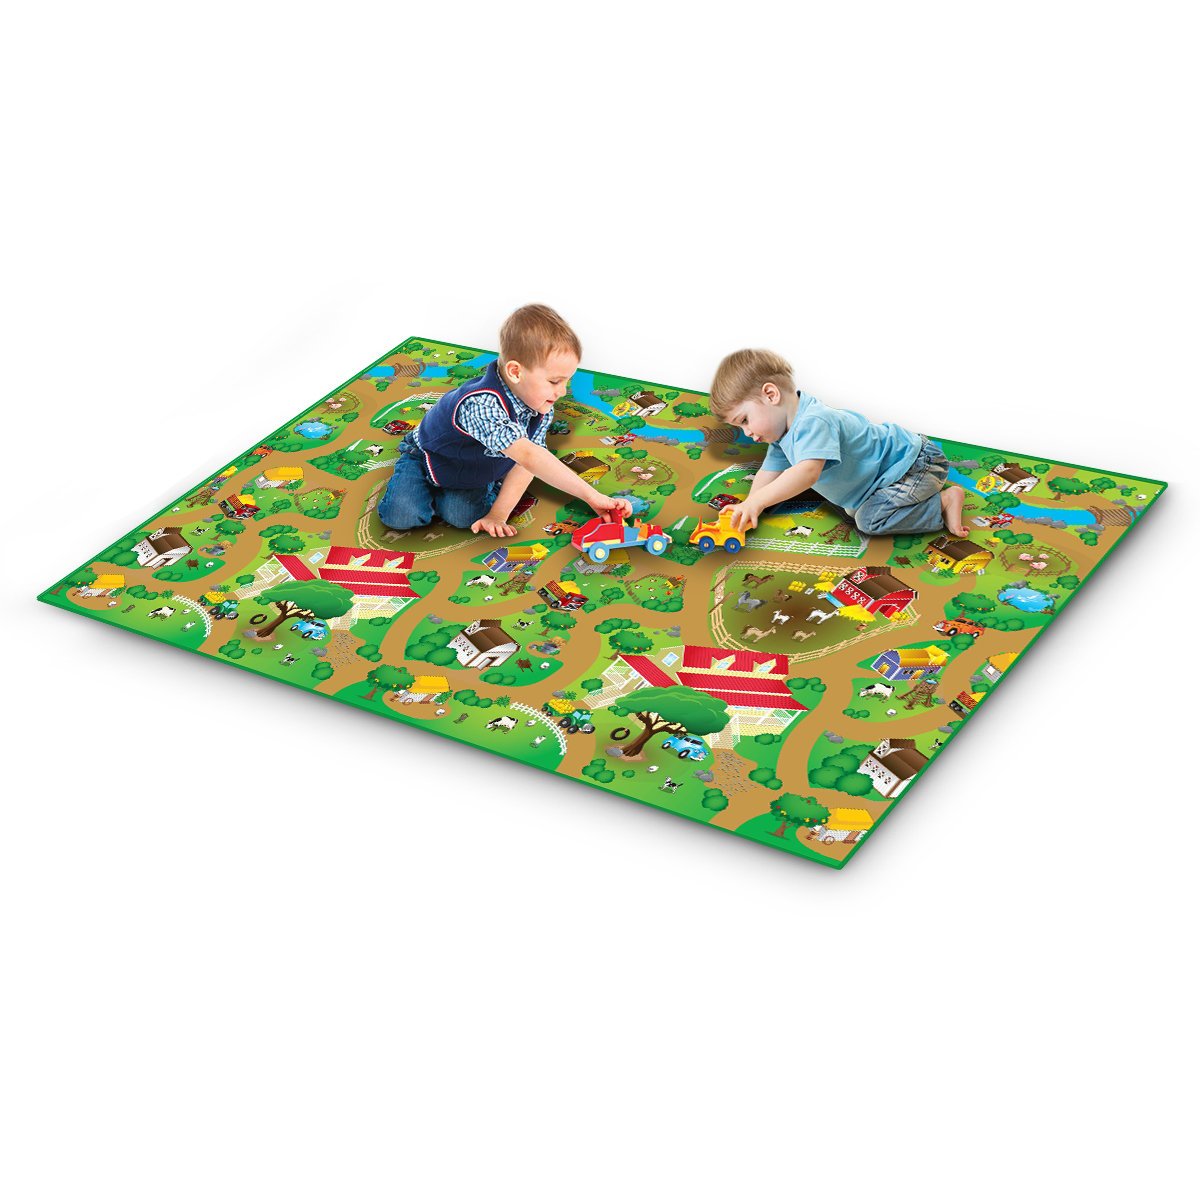 Rollmatz Farm Design Baby Kids Floor Play Mat 200cm x 120cm 1